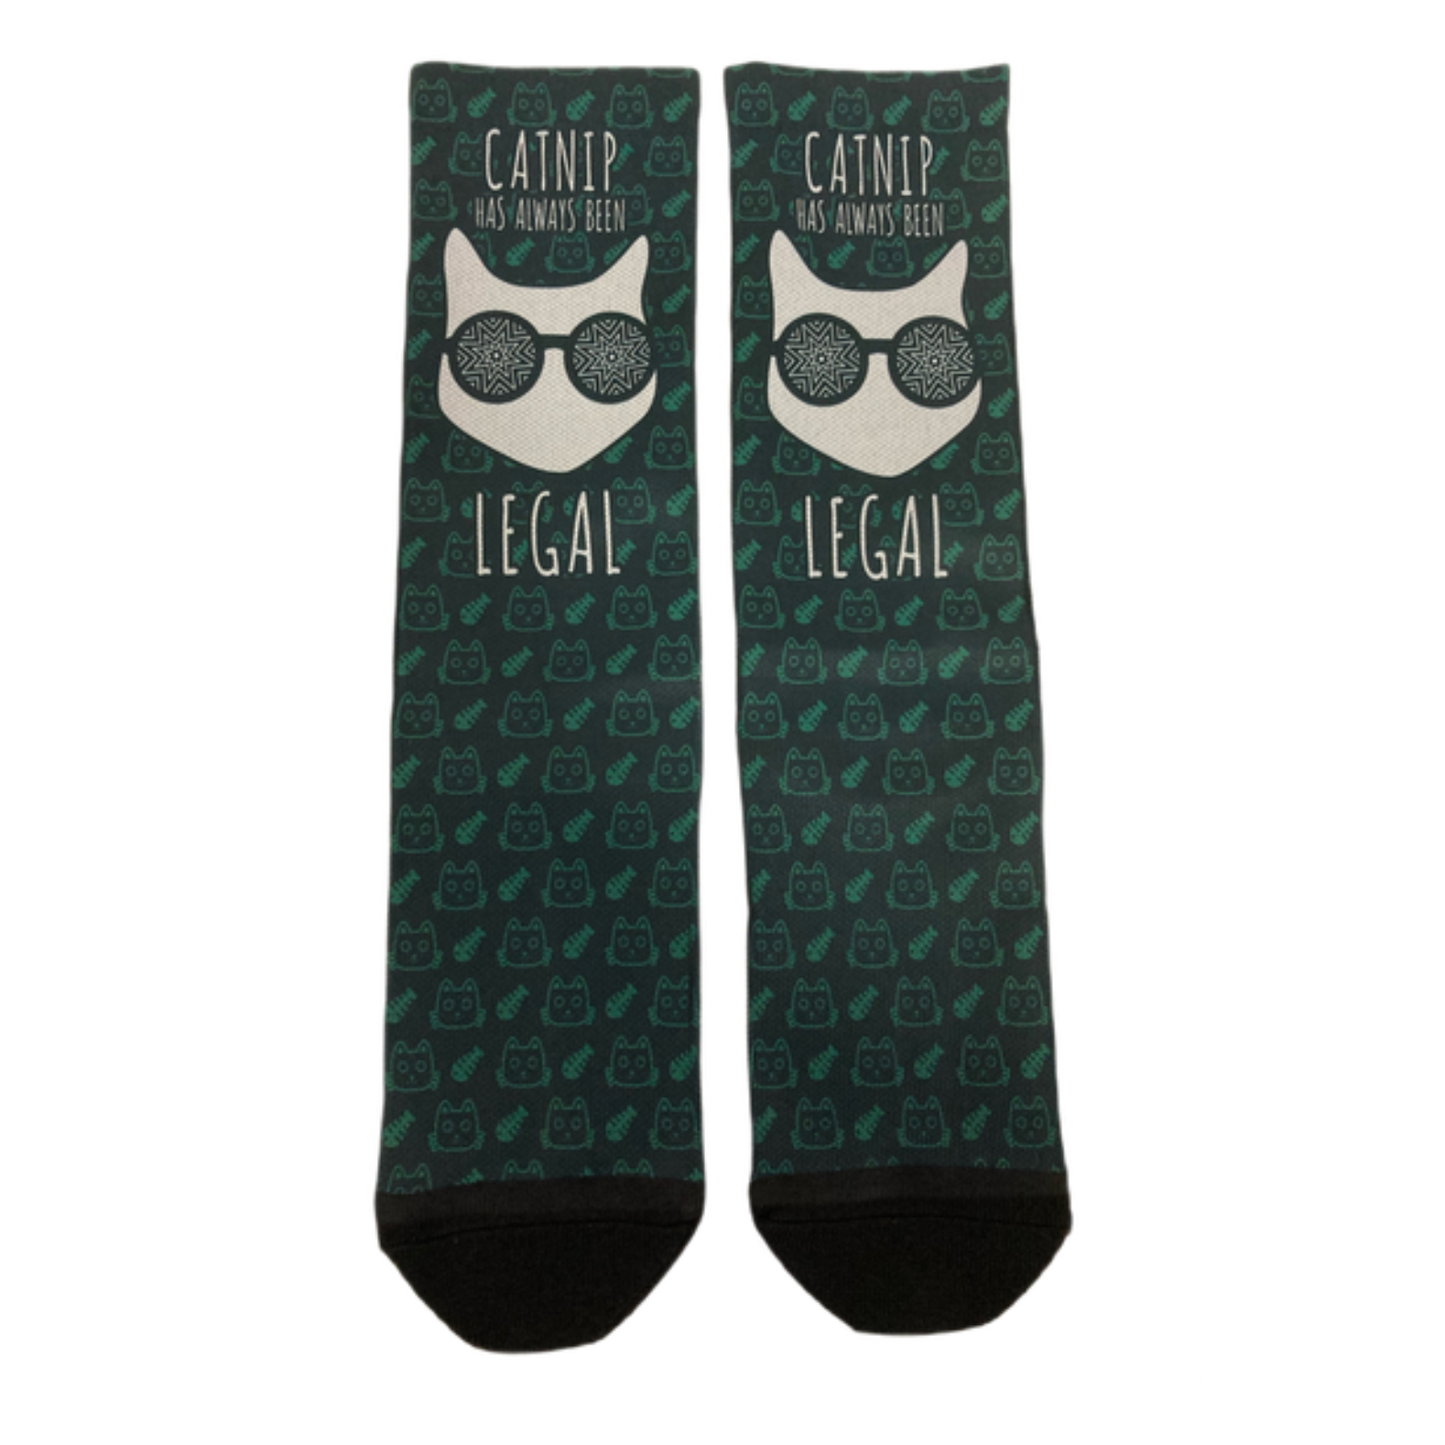 Catnip Has Always Been Legal Socks